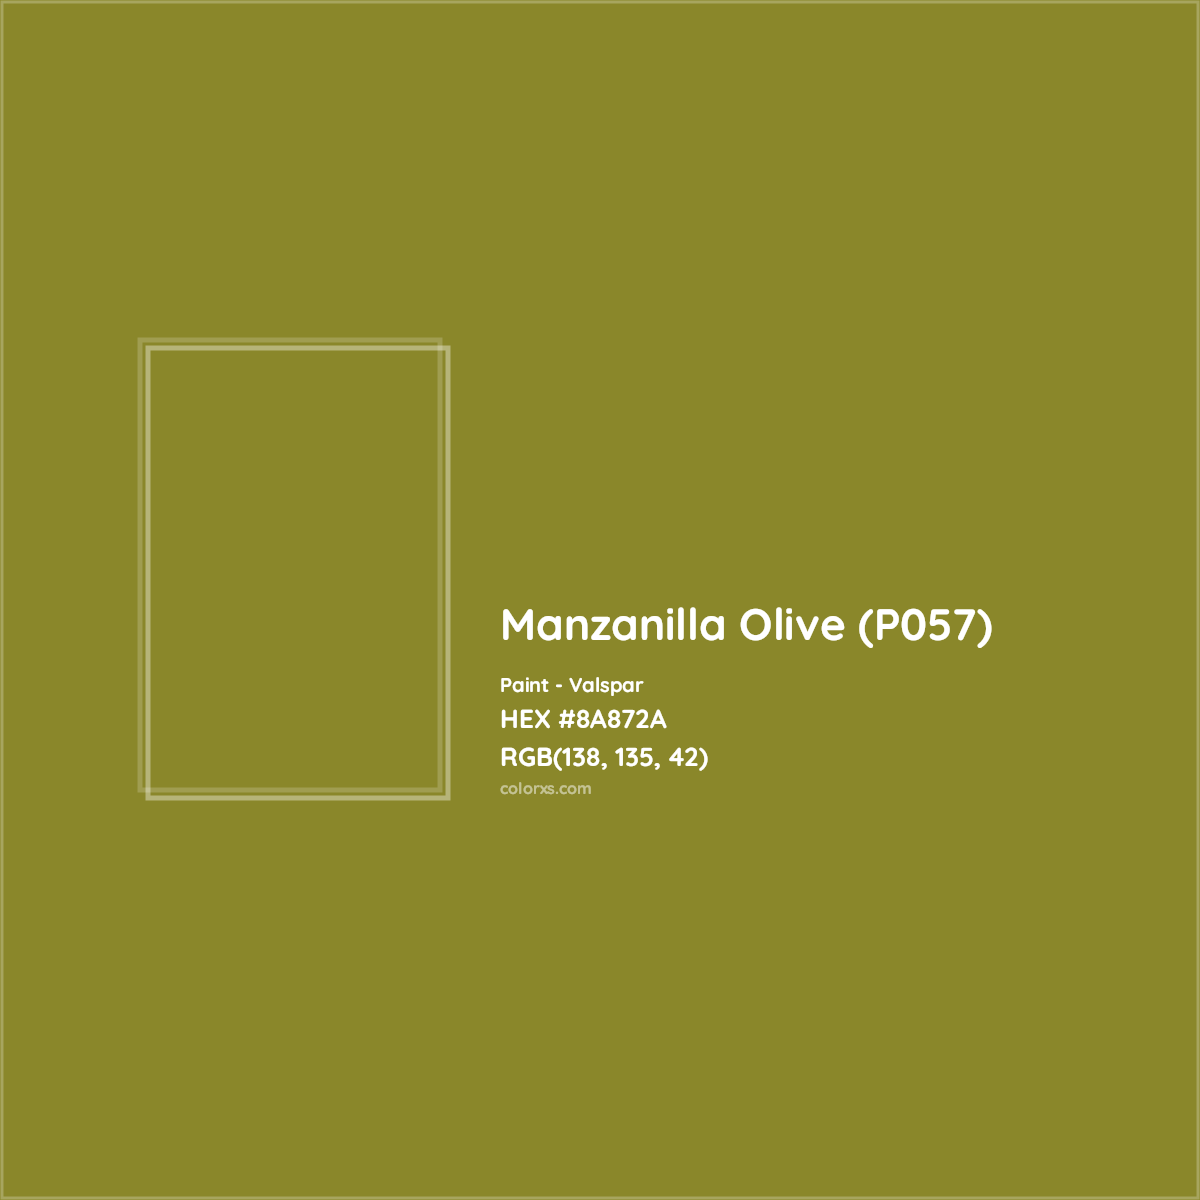 HEX #8A872A Manzanilla Olive (P057) Paint Valspar - Color Code